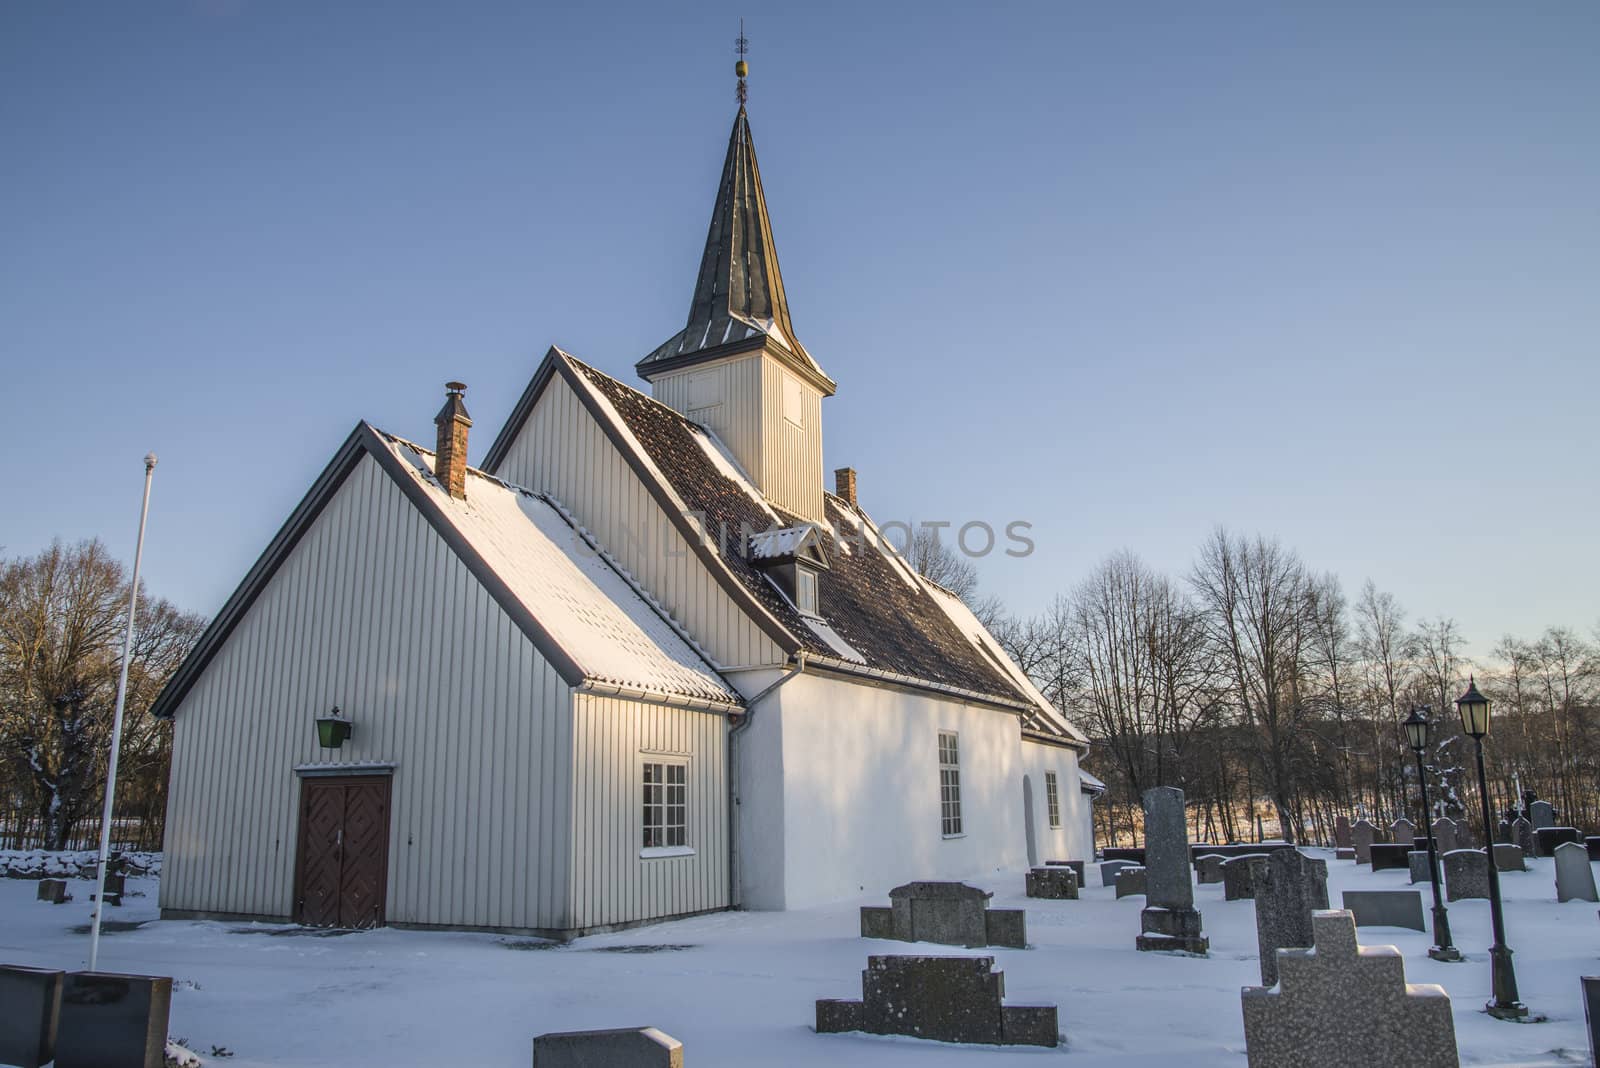 Idd church in winter, west-southwest by steirus